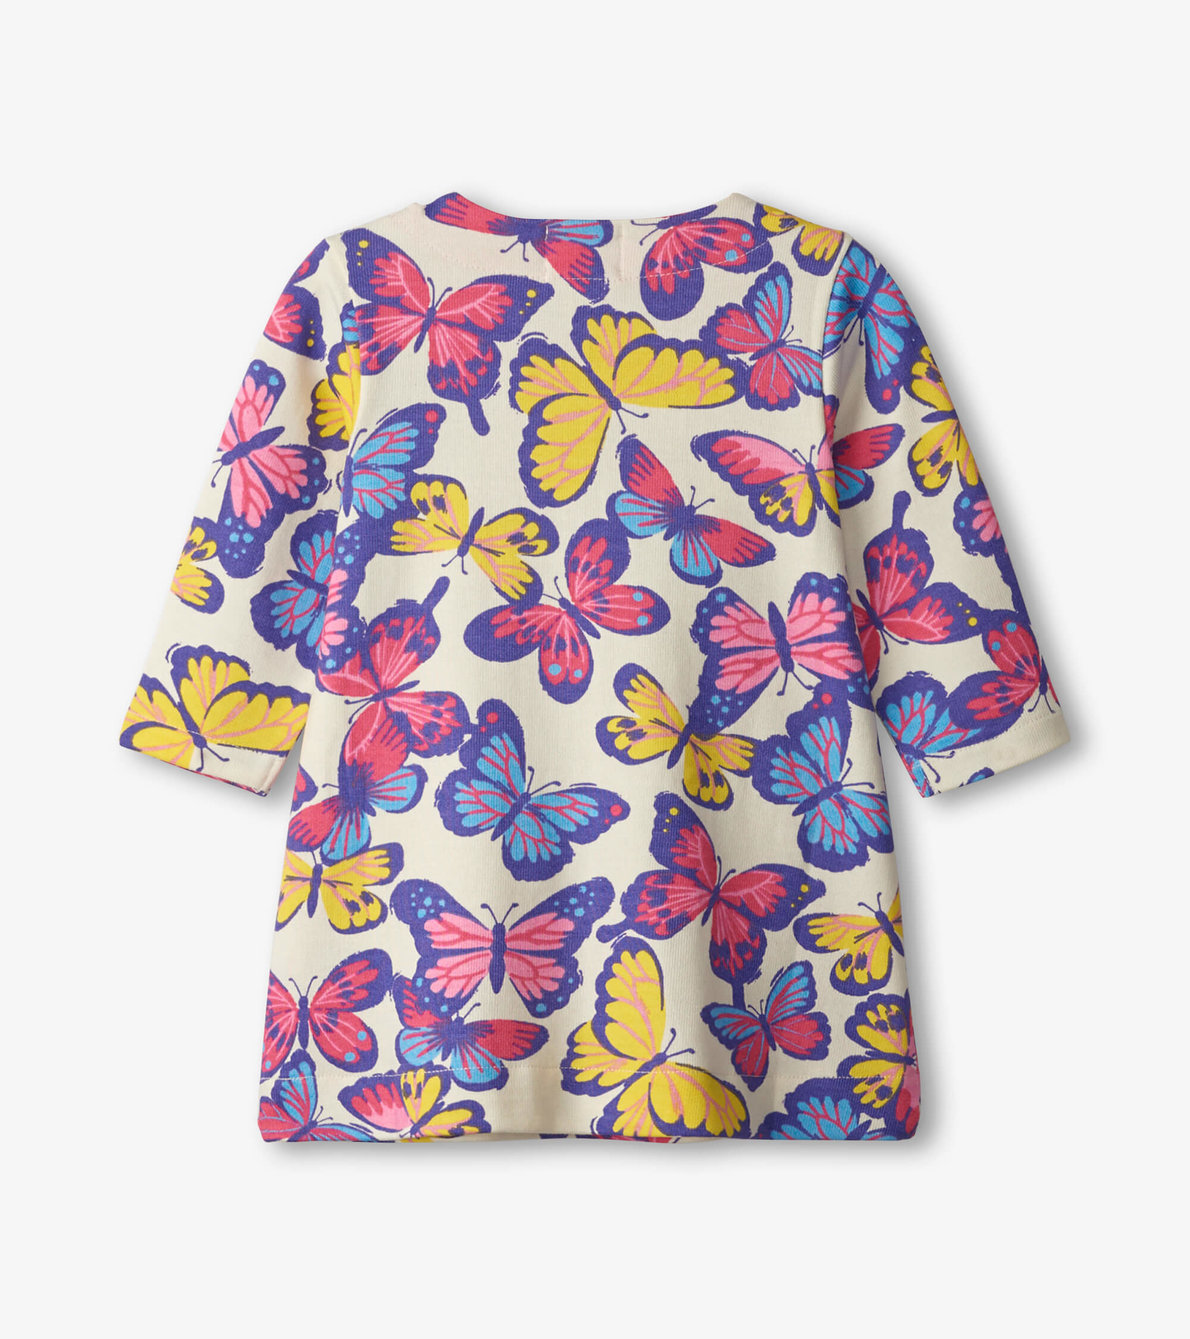 View larger image of Kaleidoscope Butterflies Baby Mod Dress